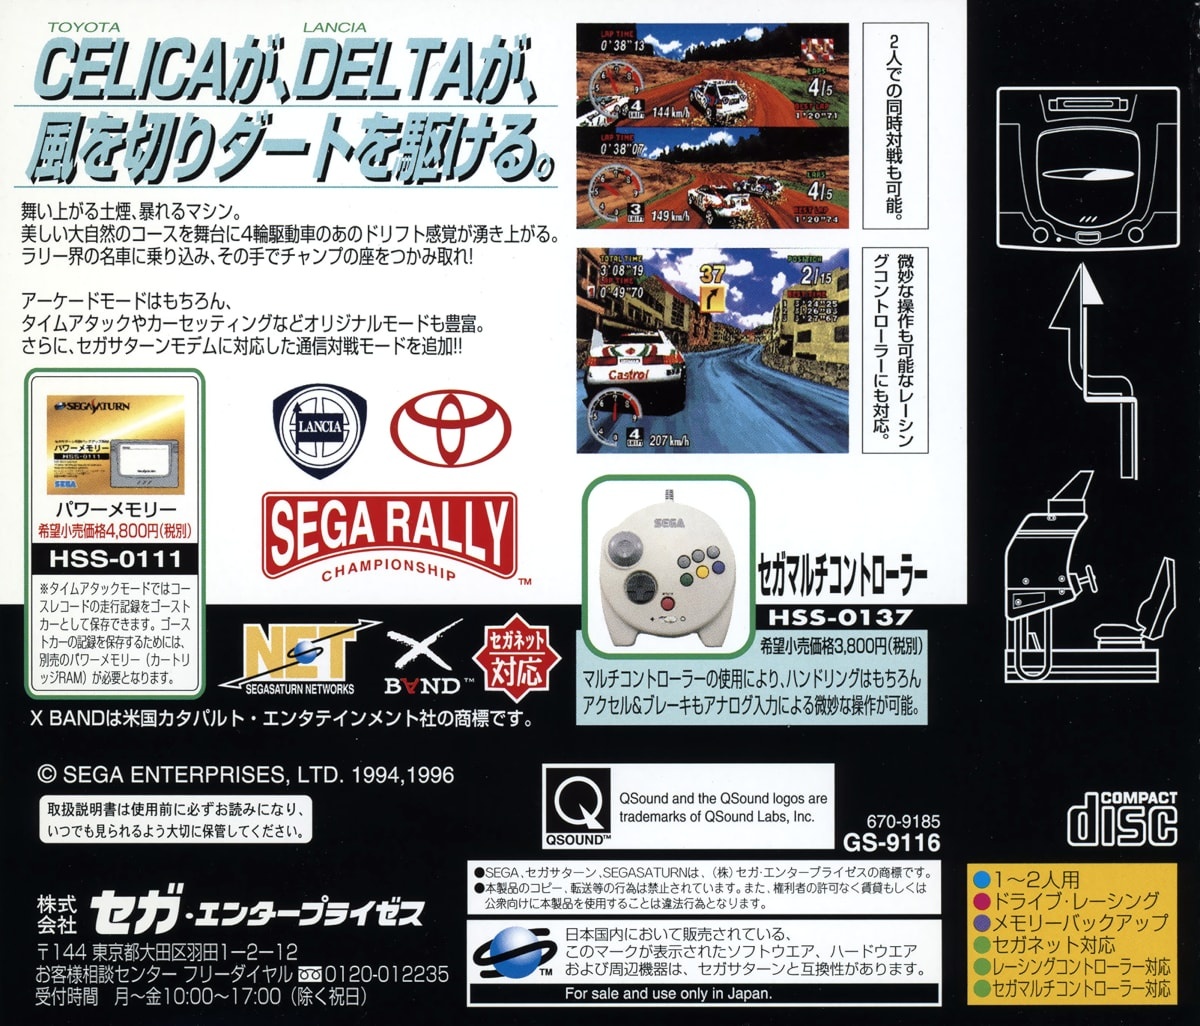 Capa do jogo Sega Rally Championship Plus